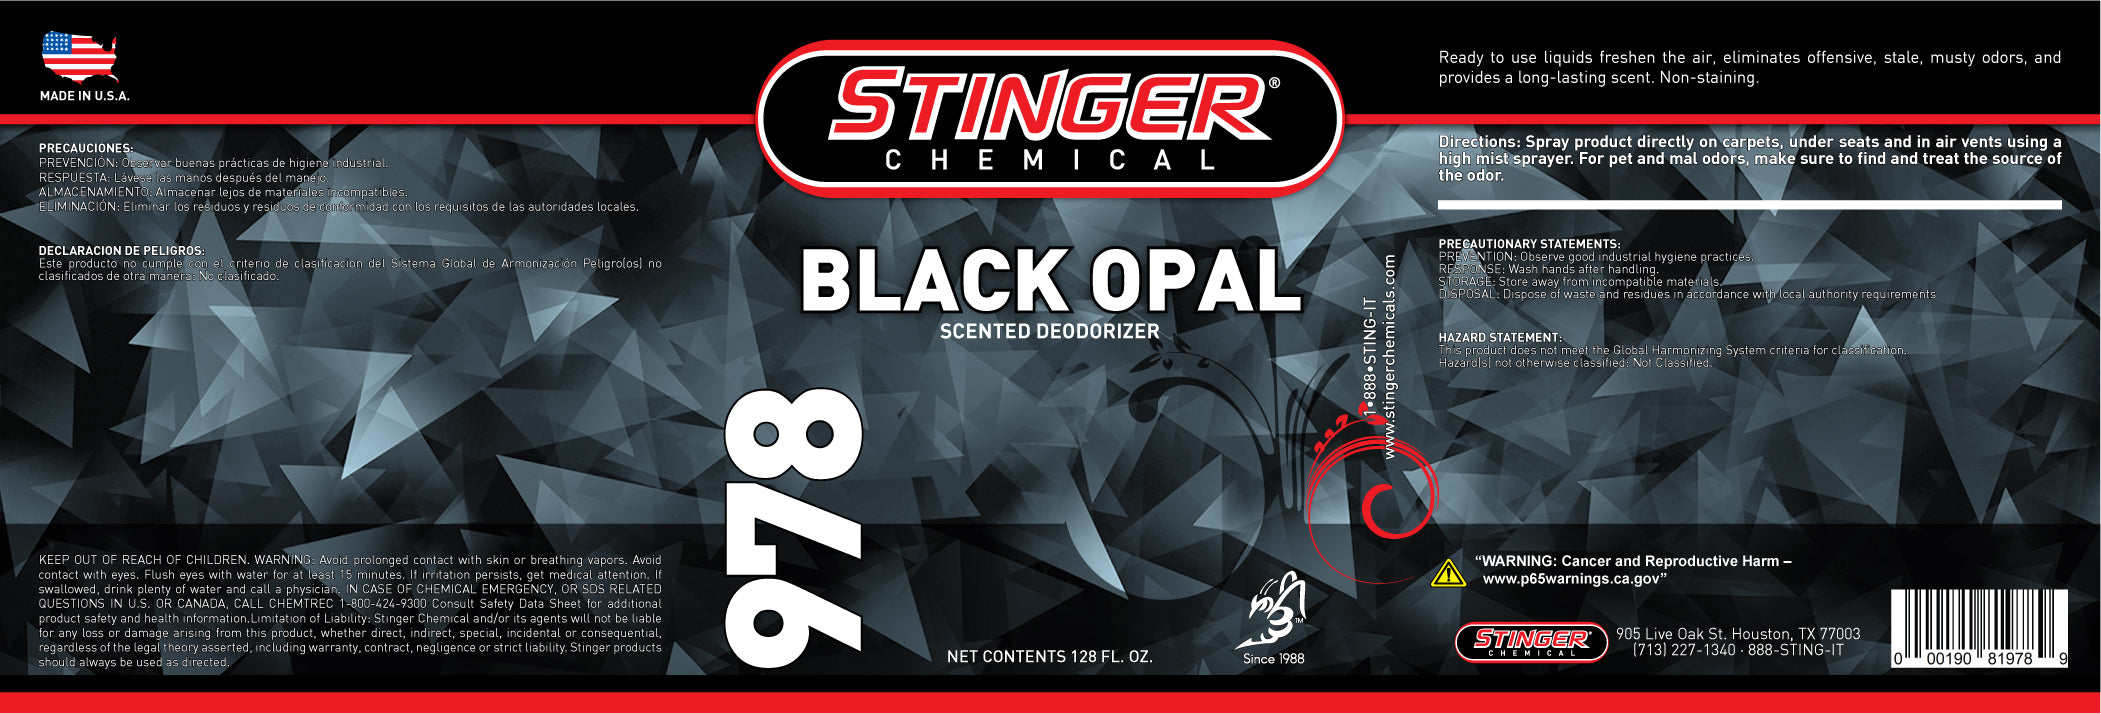 stinger-978-label